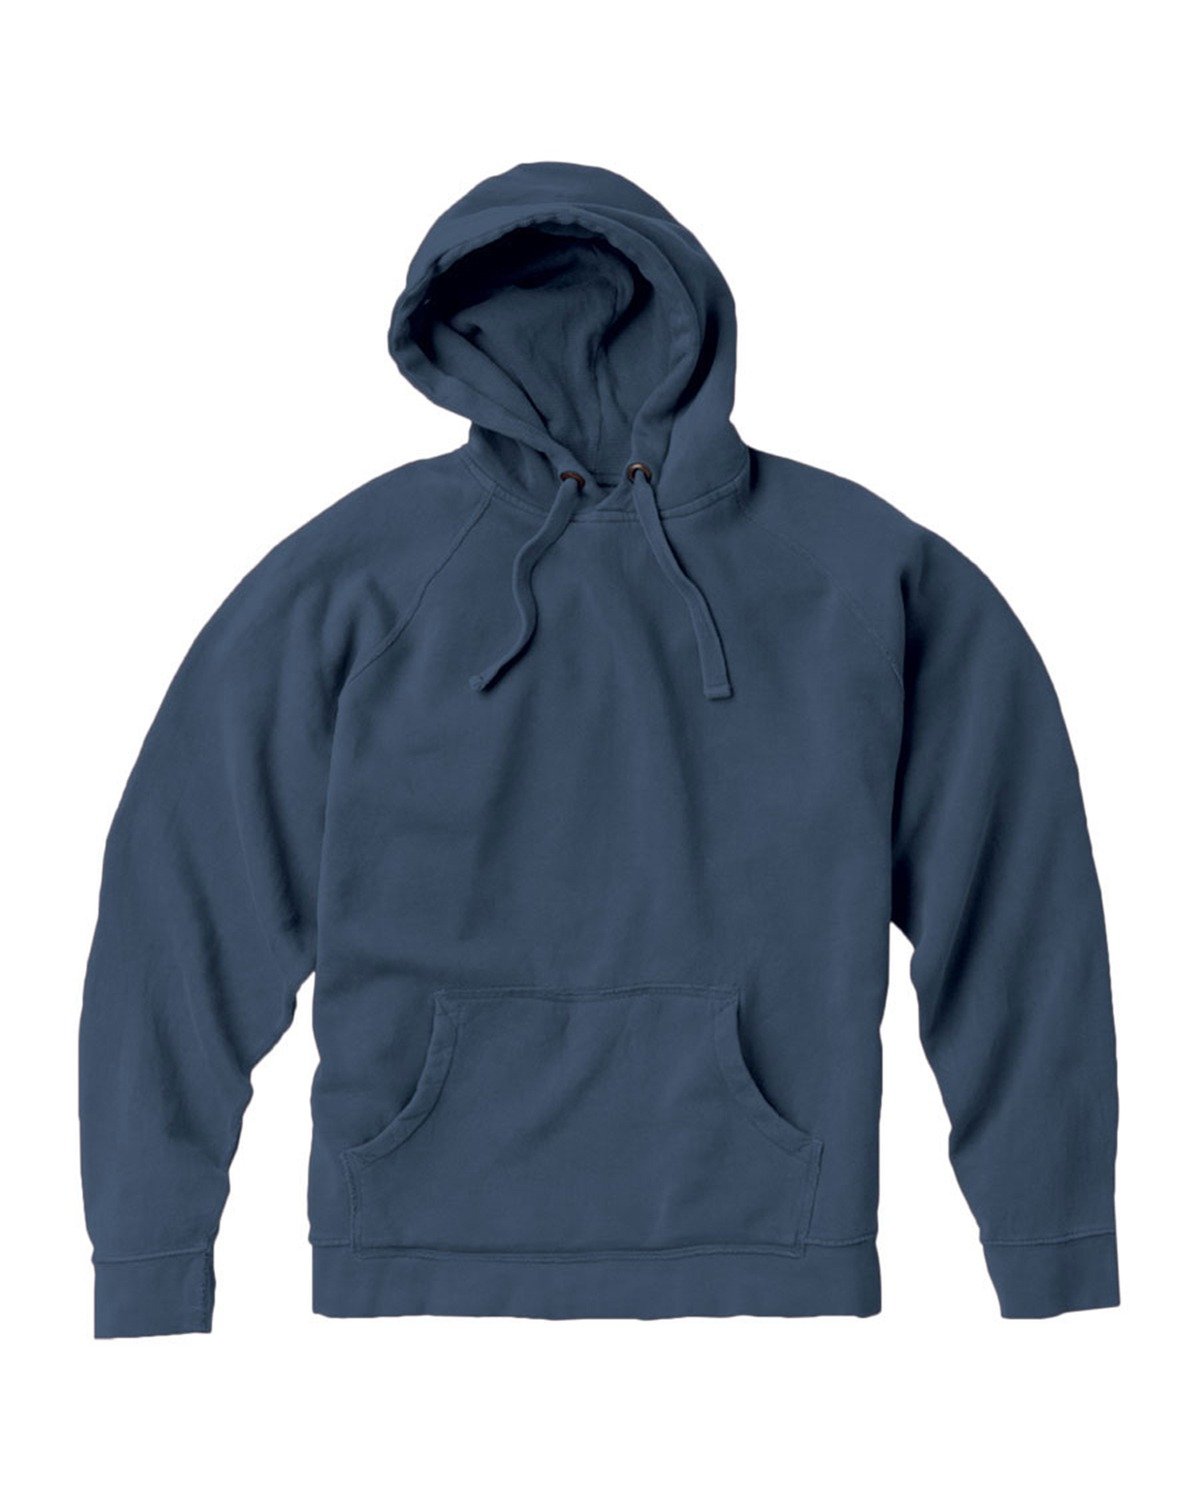 Adult Hooded Sweatshirt-Comfort Colors